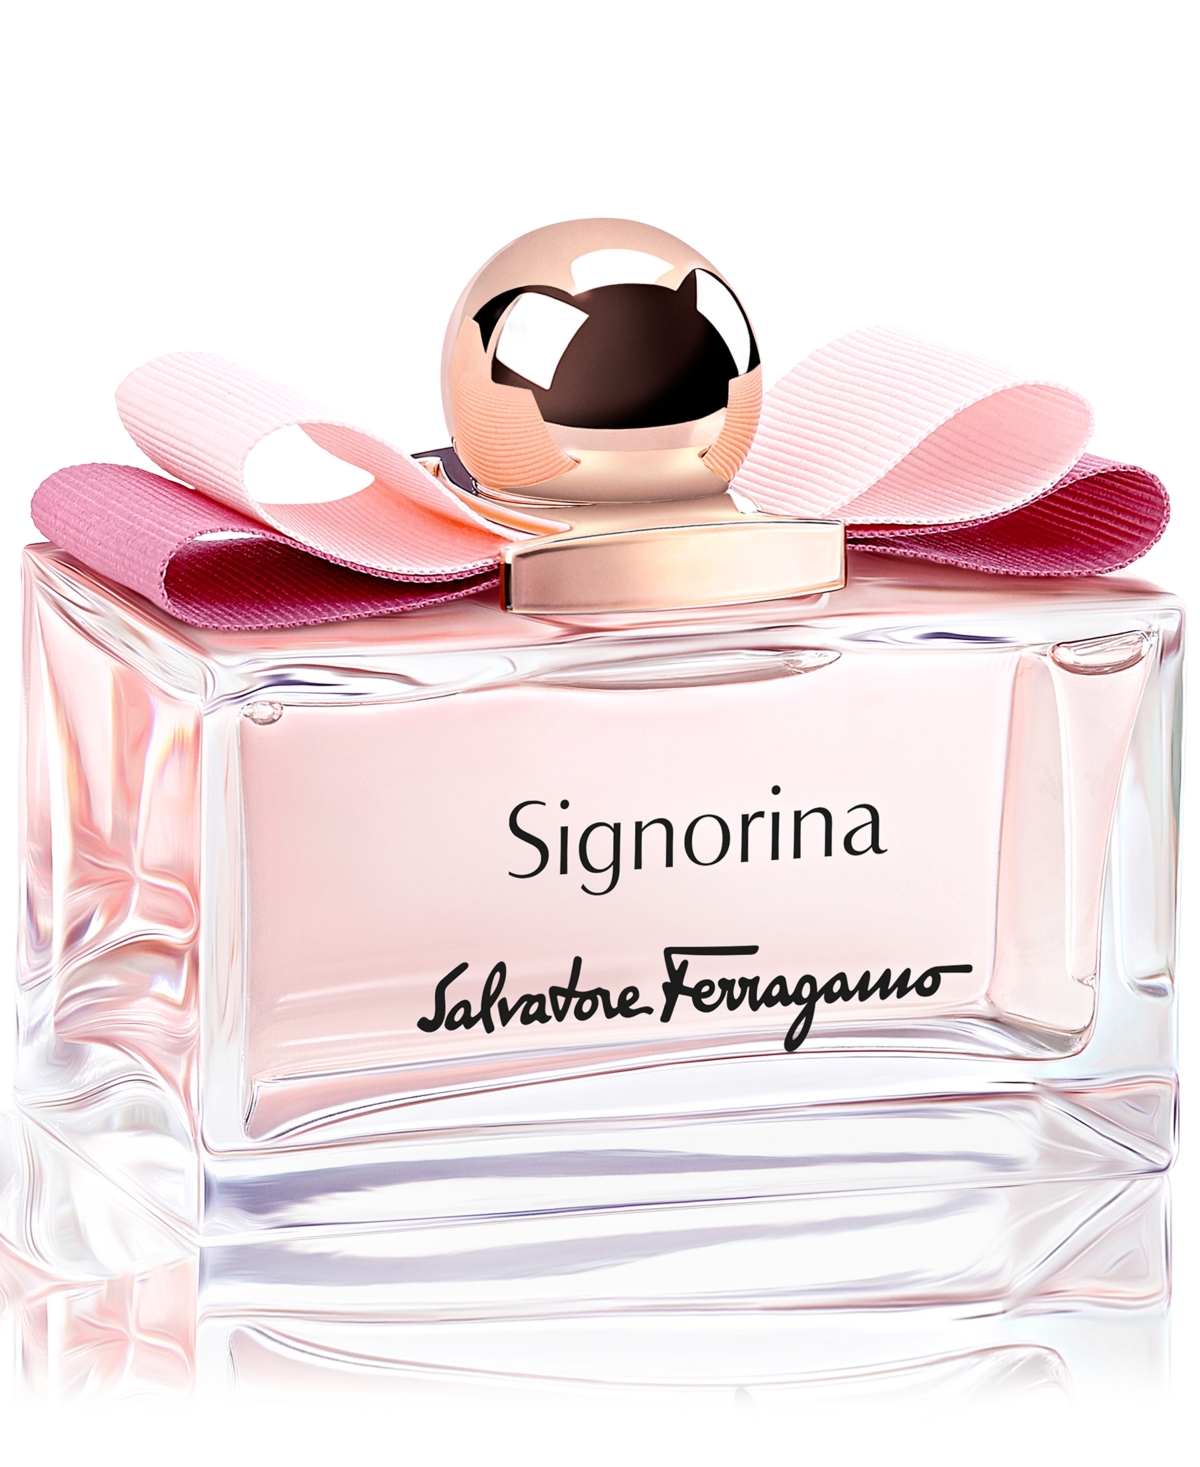 Signorina Eau de Parfum, 3.4 oz.